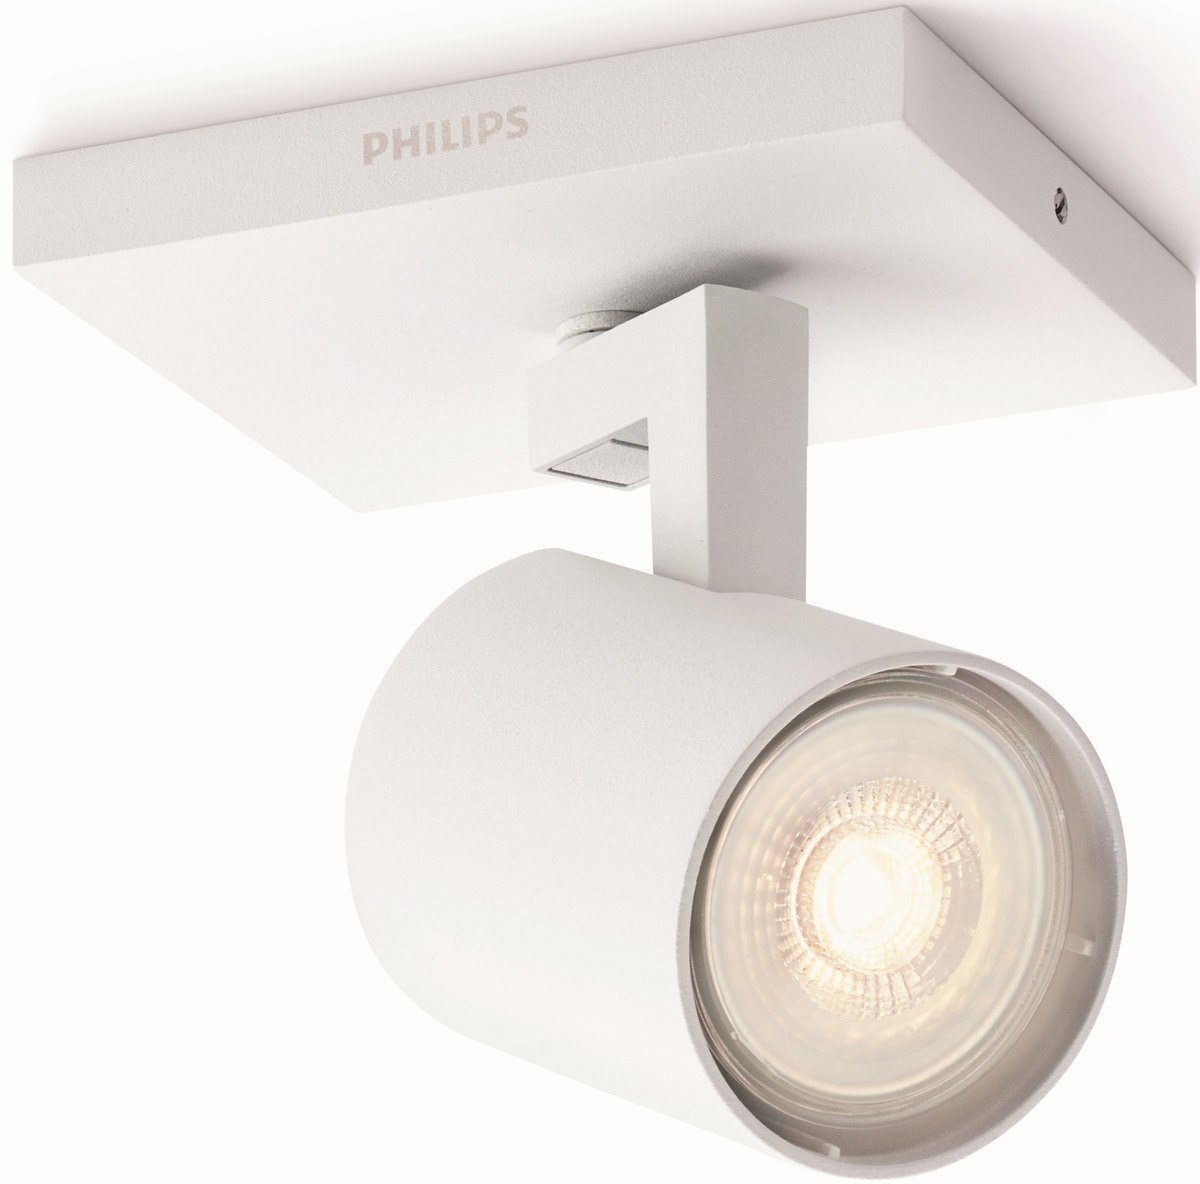 230lm, myLiving Weiß LED Runner, Warmweiß, Philips 1flg. Spot wechselbar, Deckenspot LED